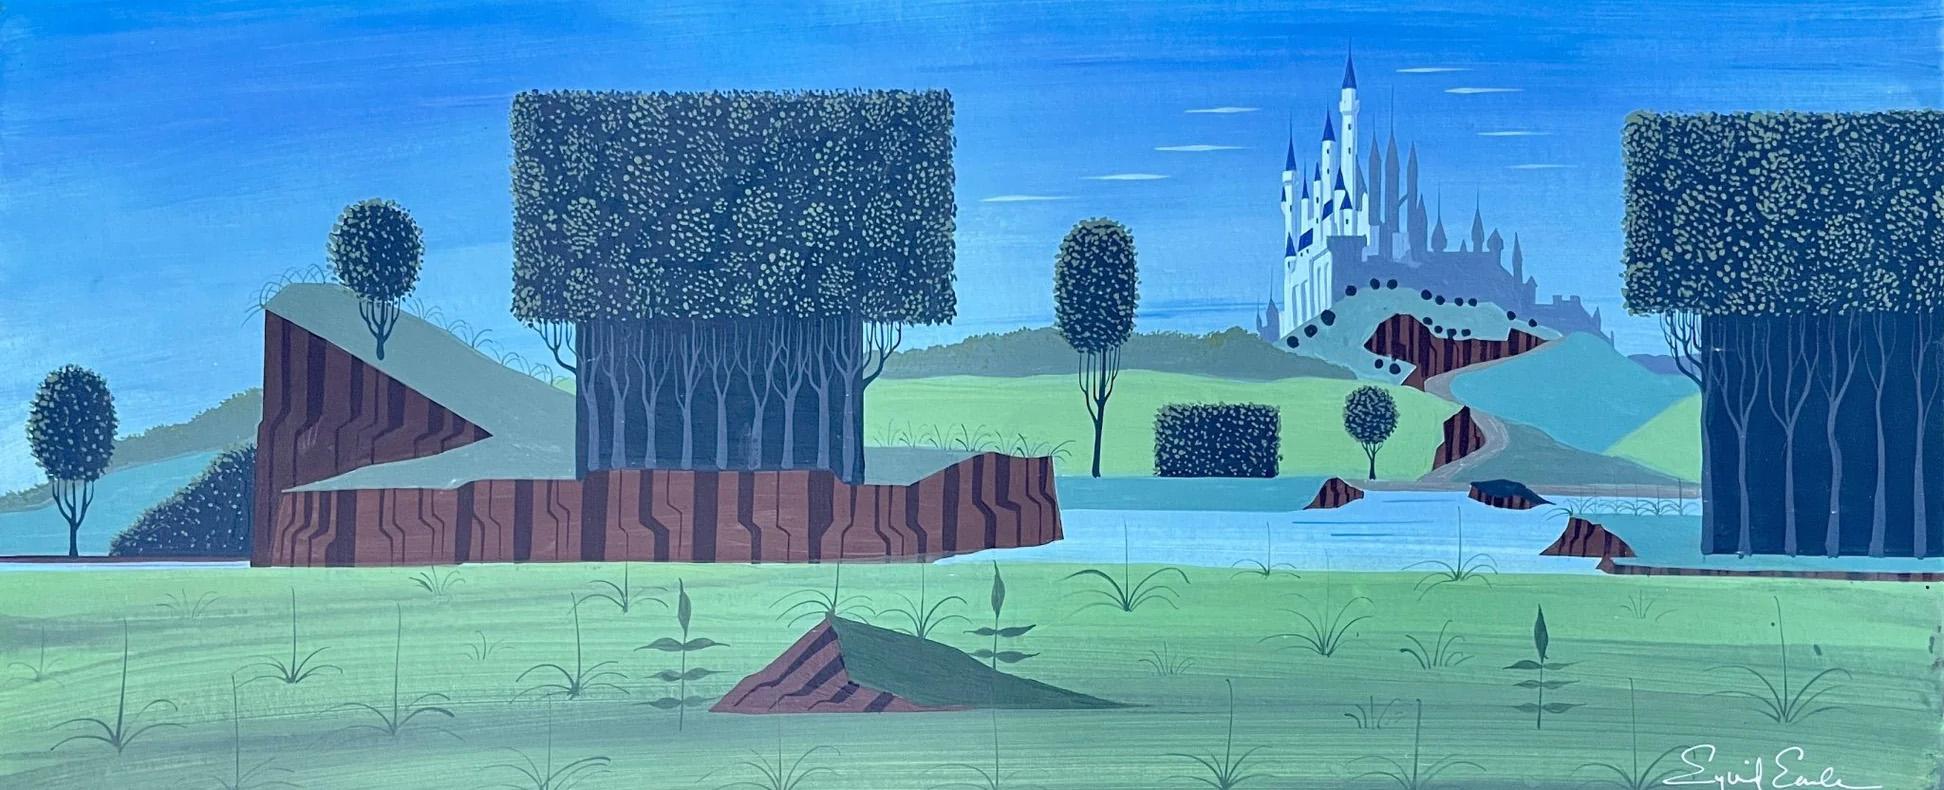 Eyvind Earle - Sleeping Beauty Original Concept Painting: The Castle ...